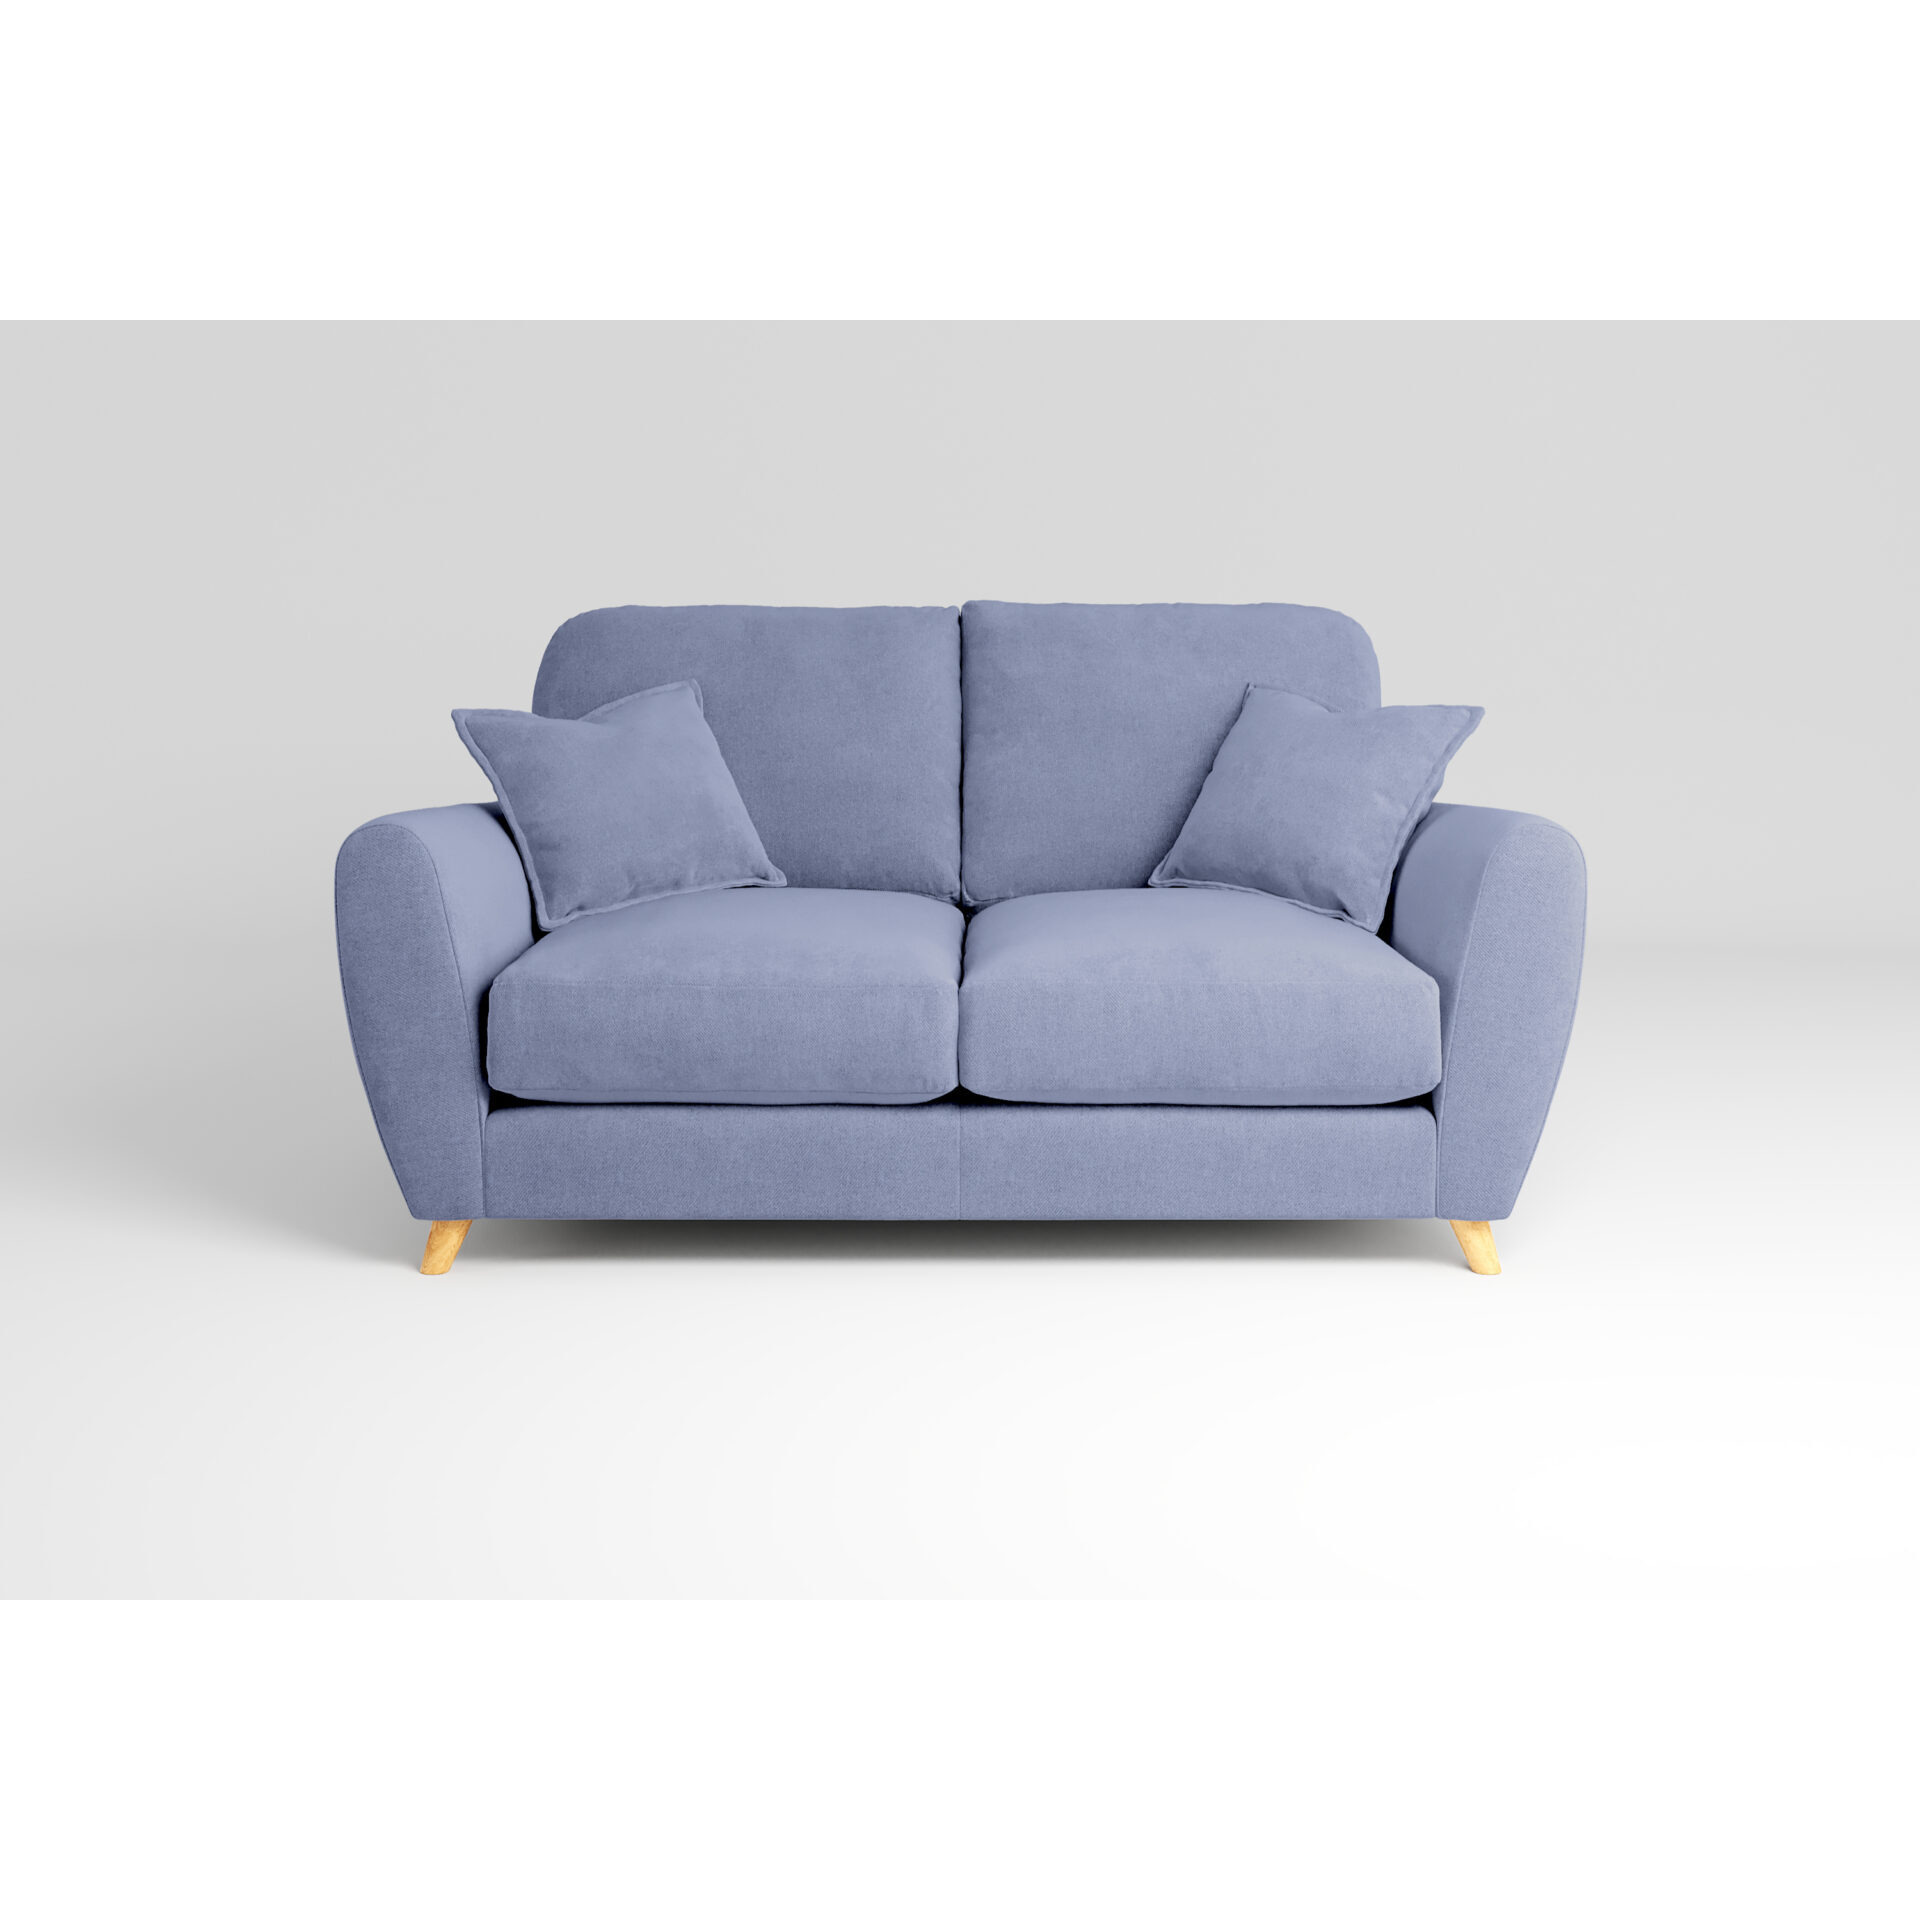 Cloud Nine - 2 Seater Sofa in Brushed Wool Feel Denim